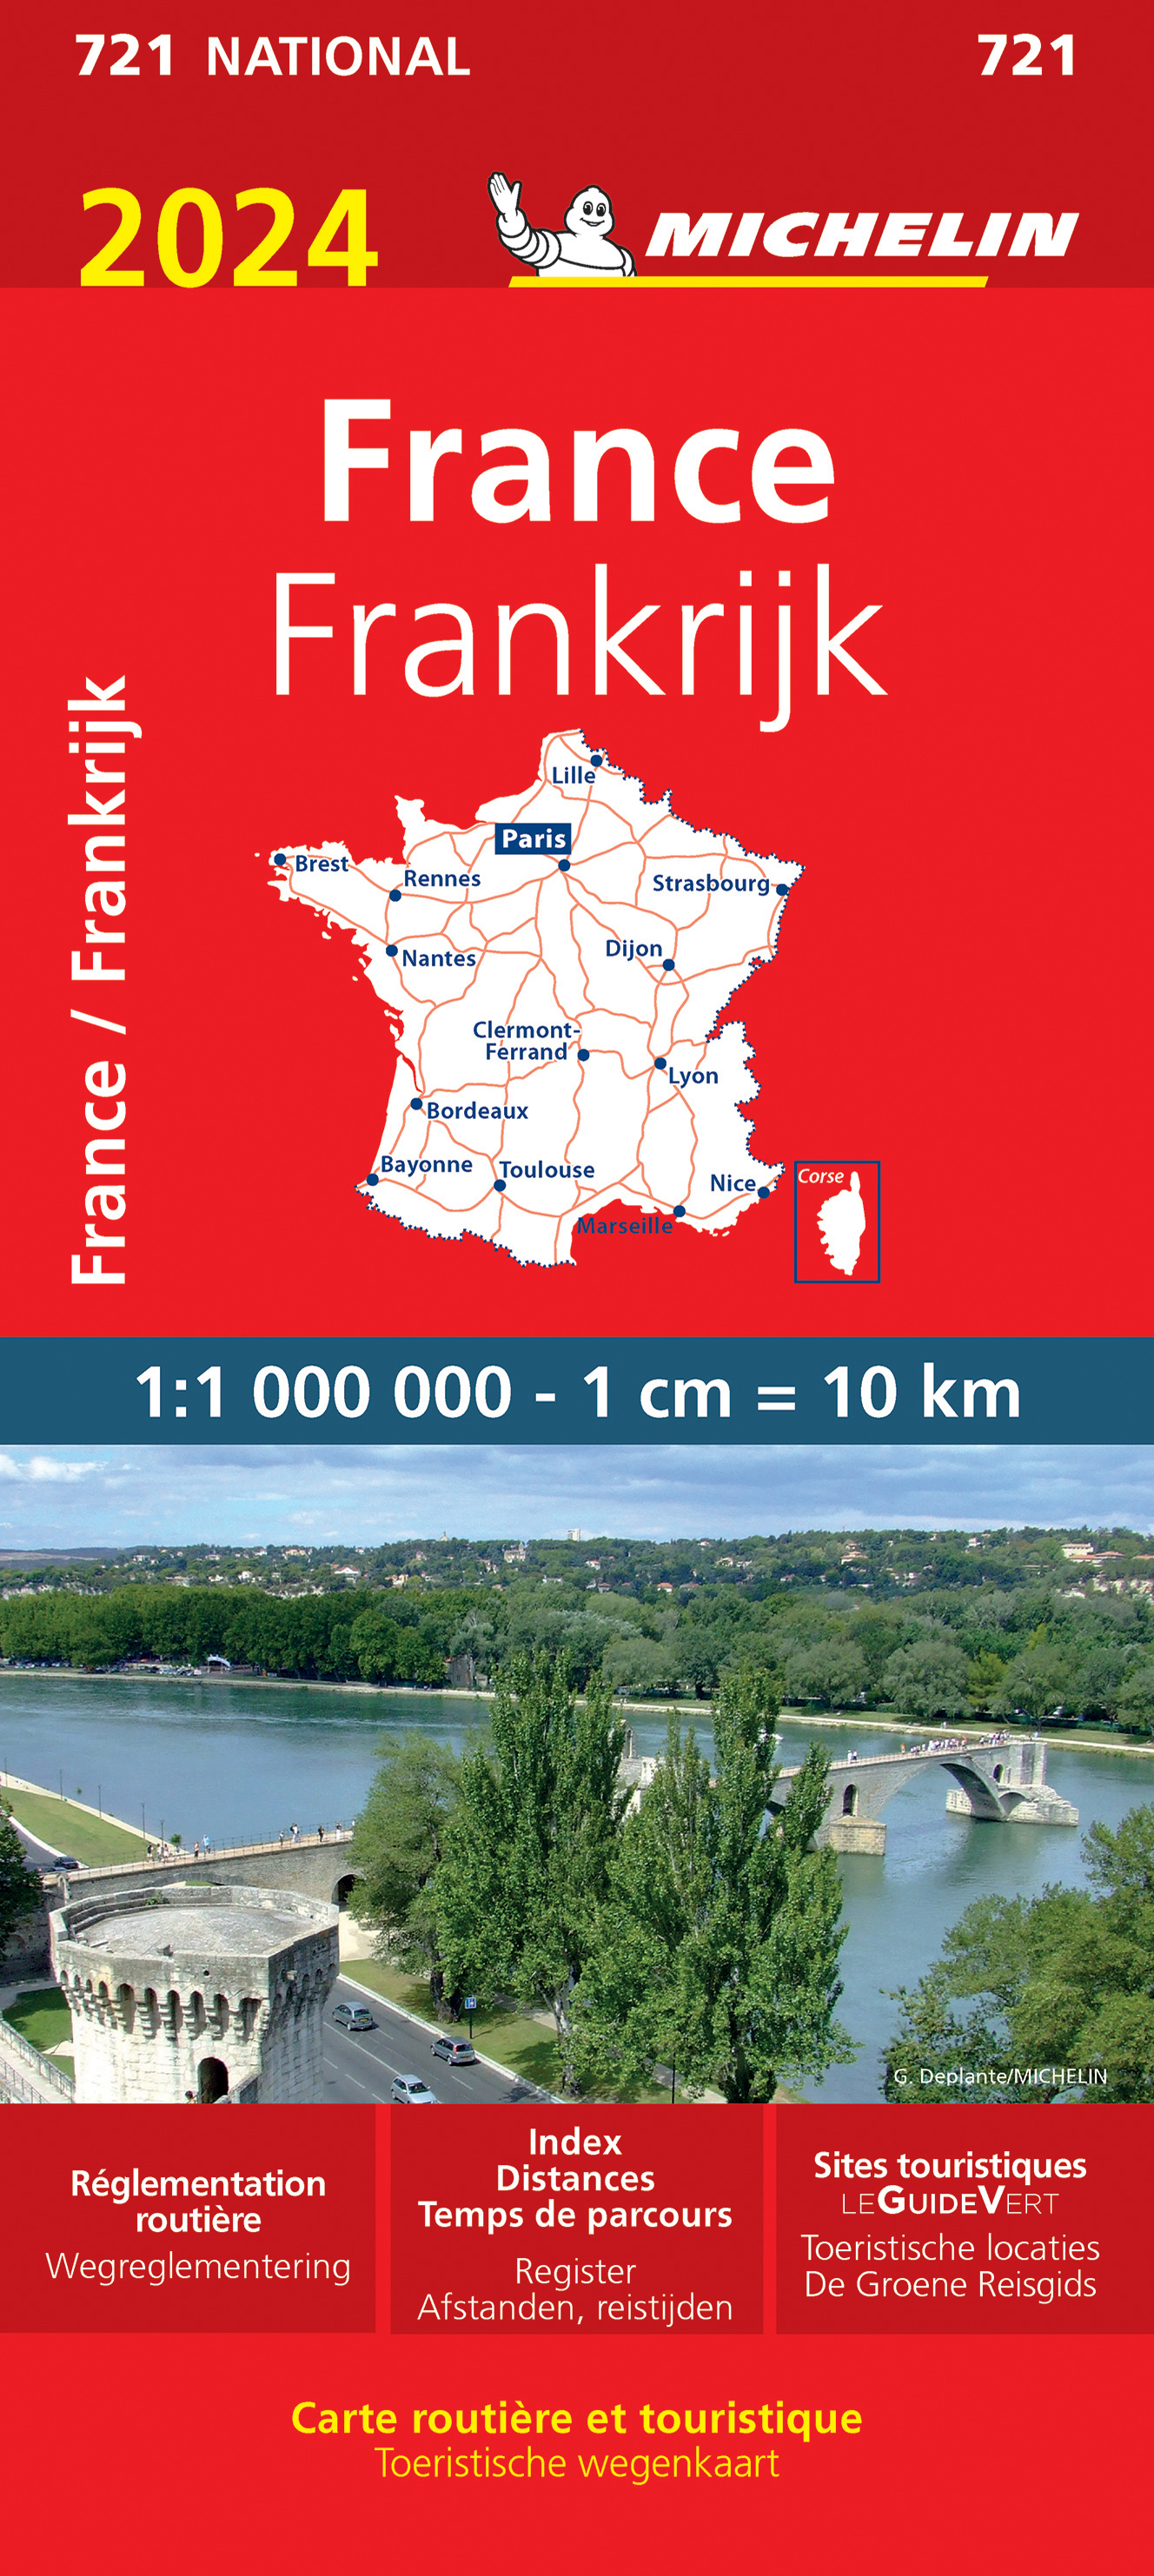 Online bestellen: Wegenkaart - landkaart 721 Frankrijk 2024 | Michelin